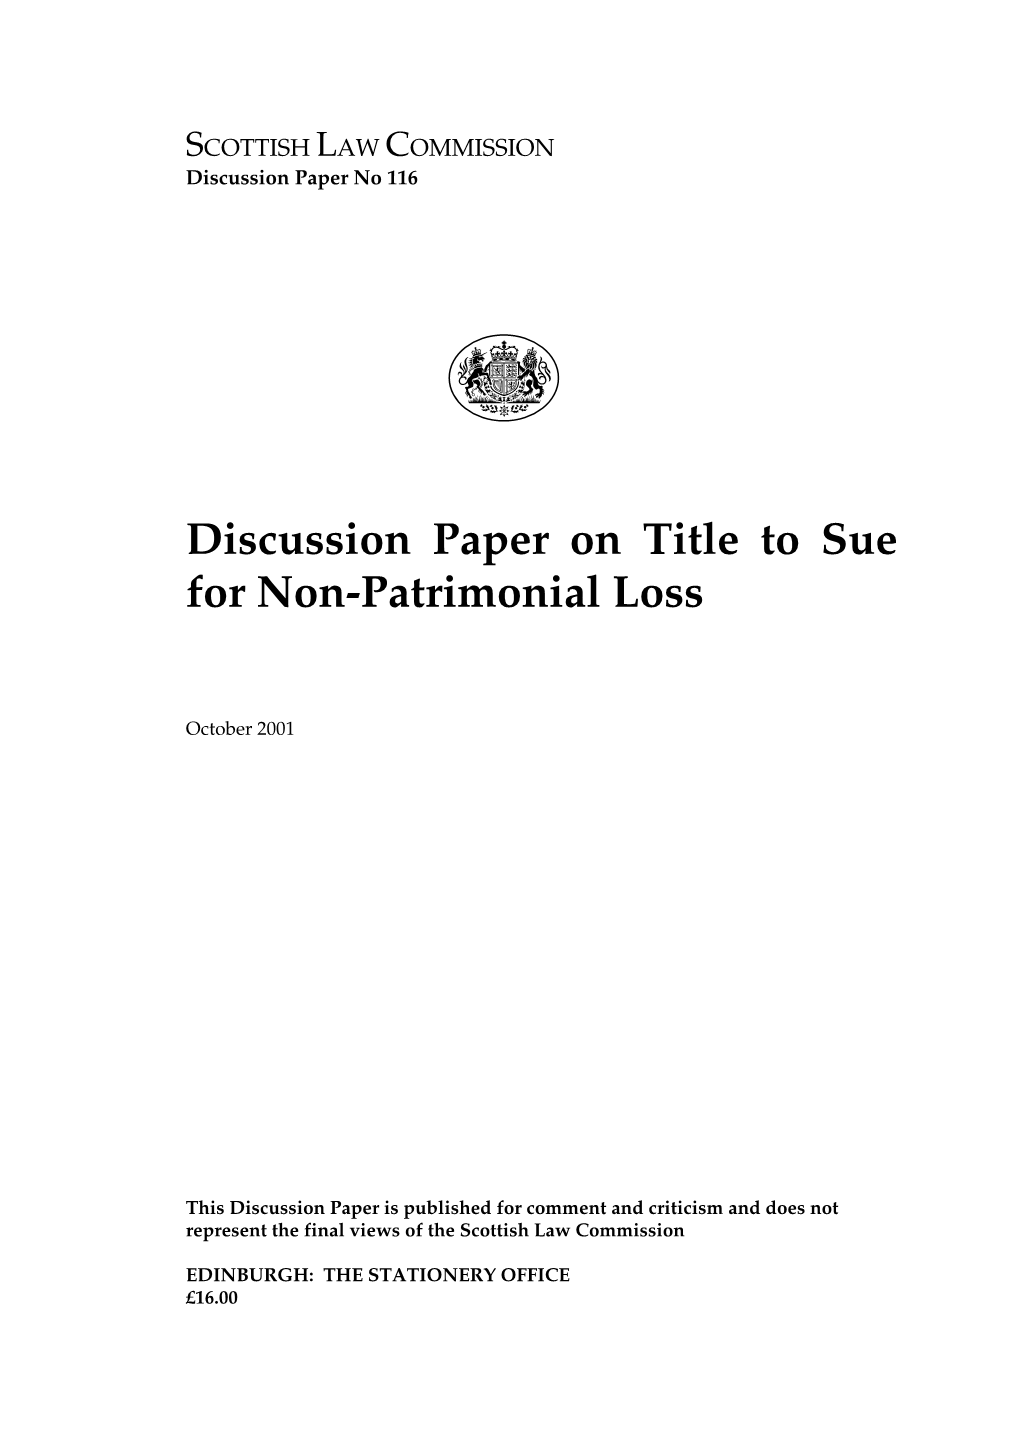 Title to Sue for Non-Patrimonial Loss Discussion Paper